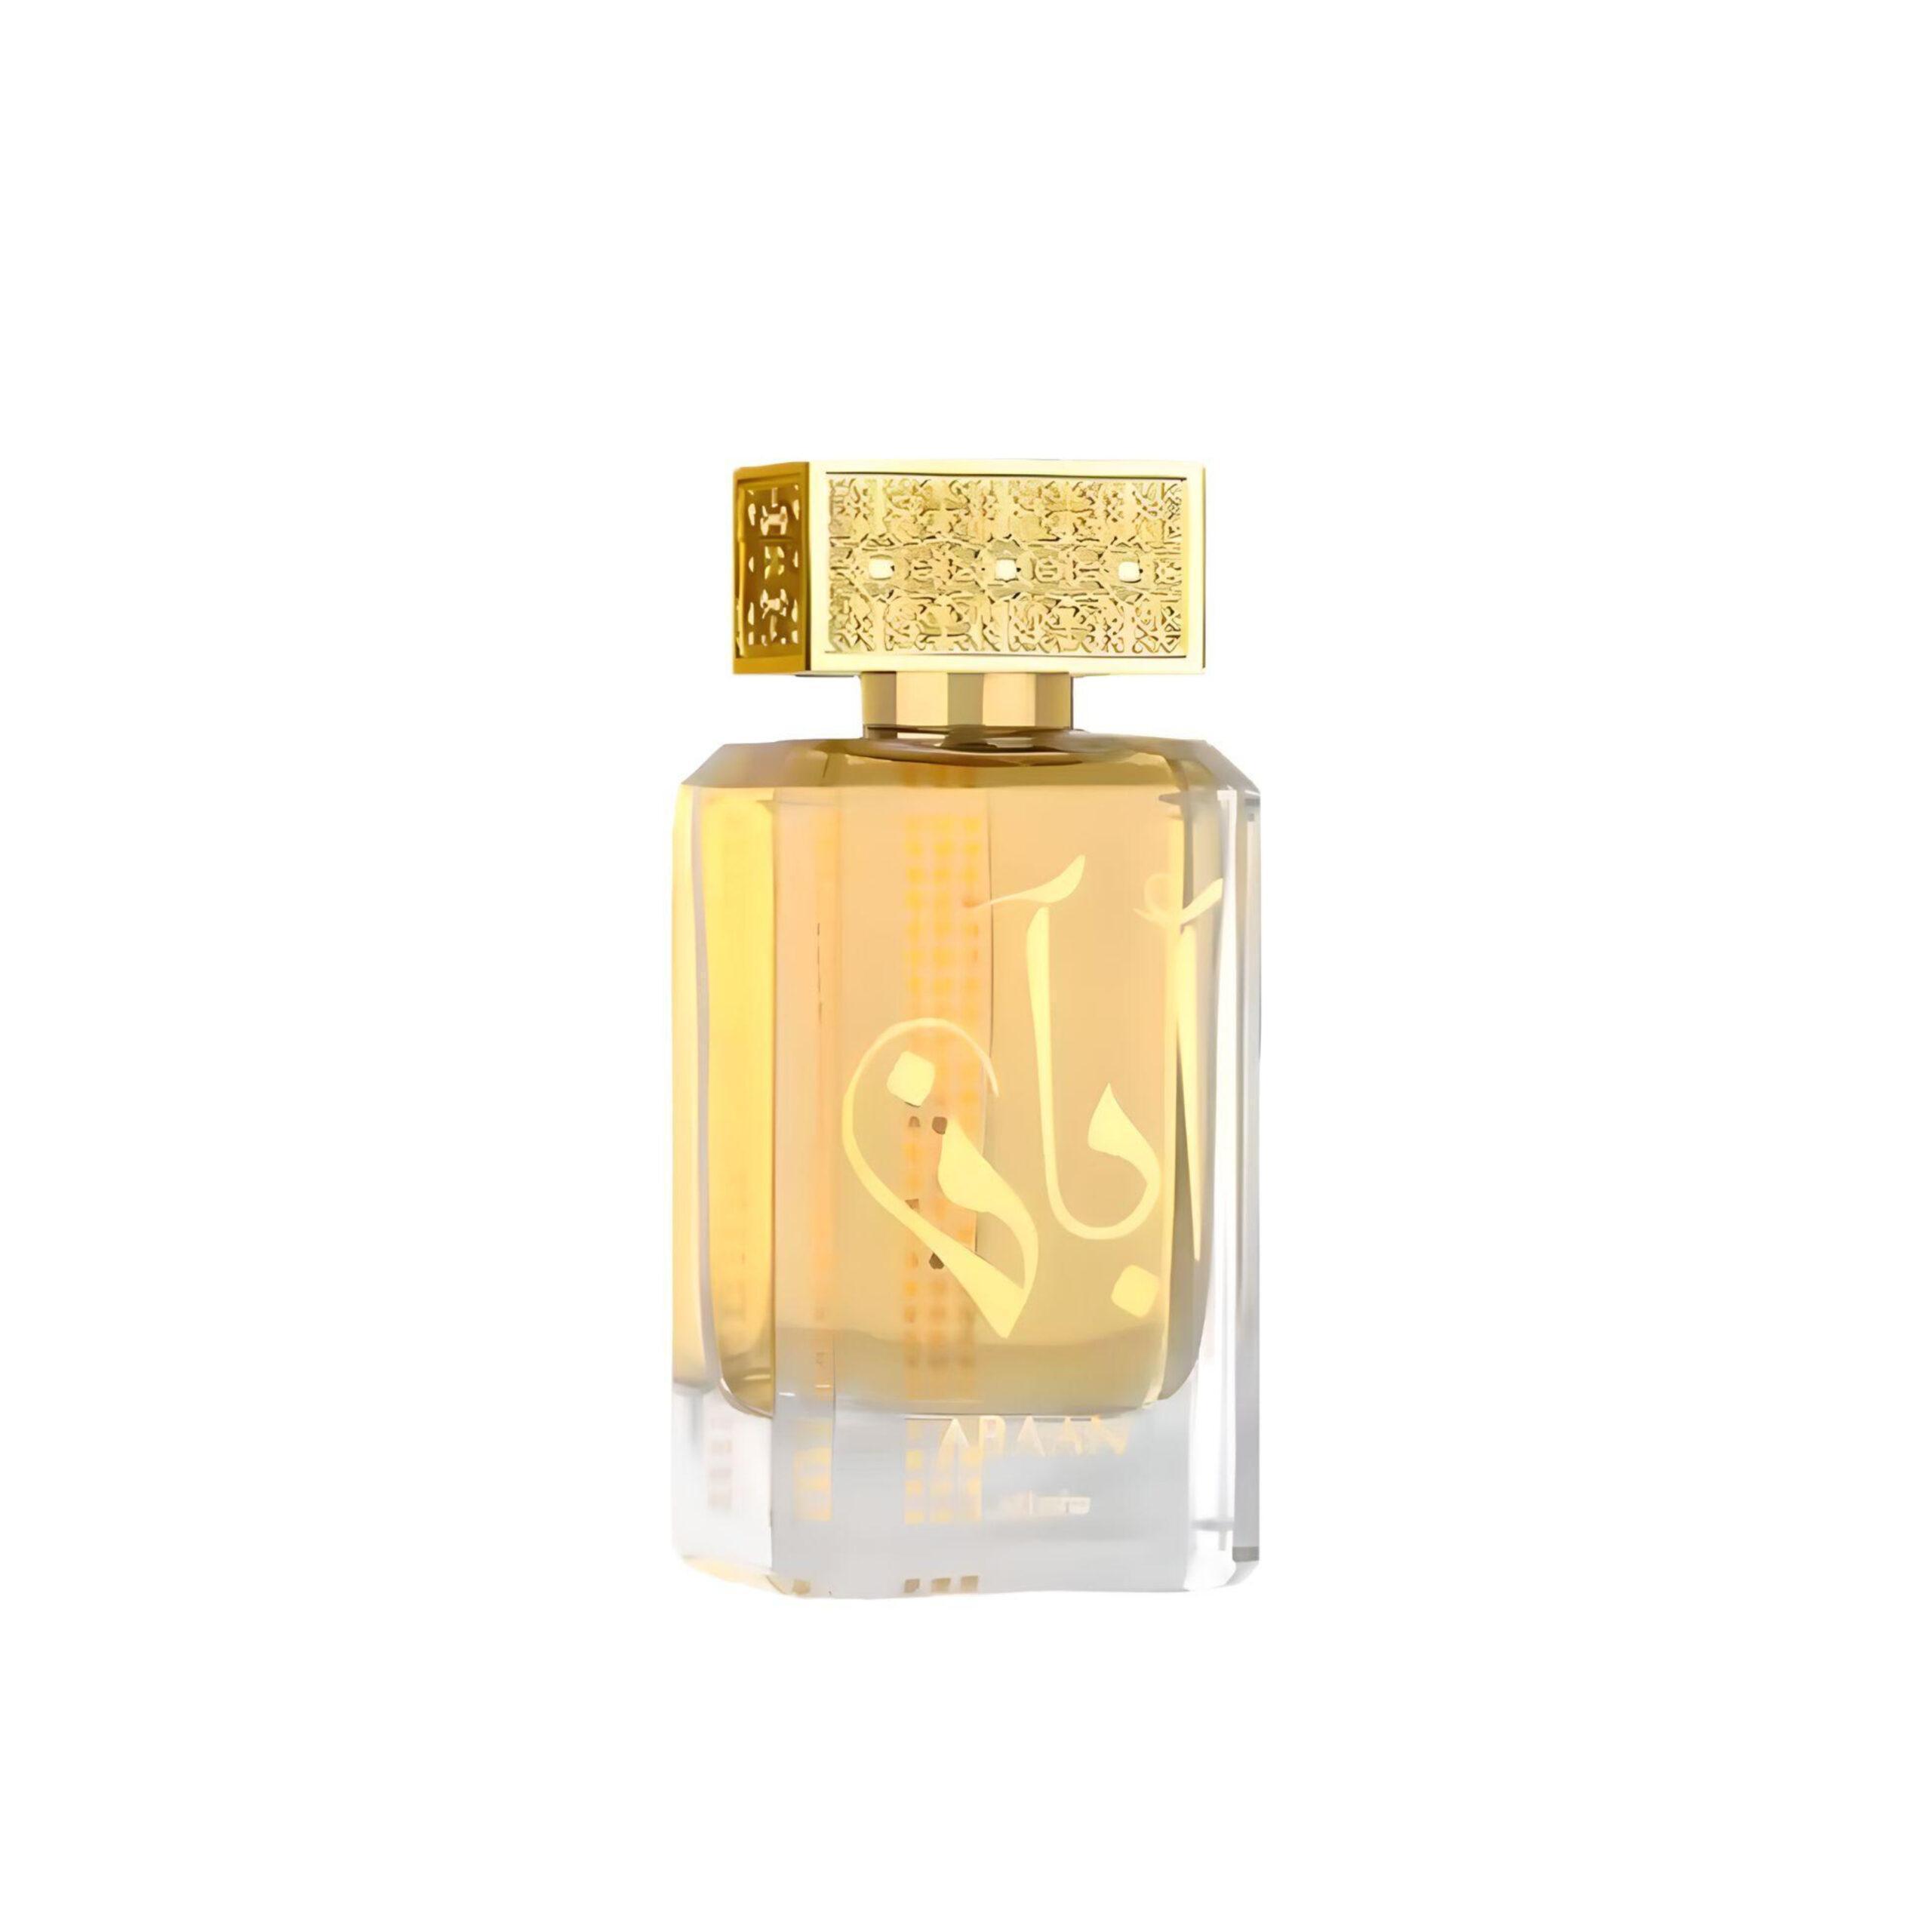 Abaan Perfume 100Ml Edp By Lattafa